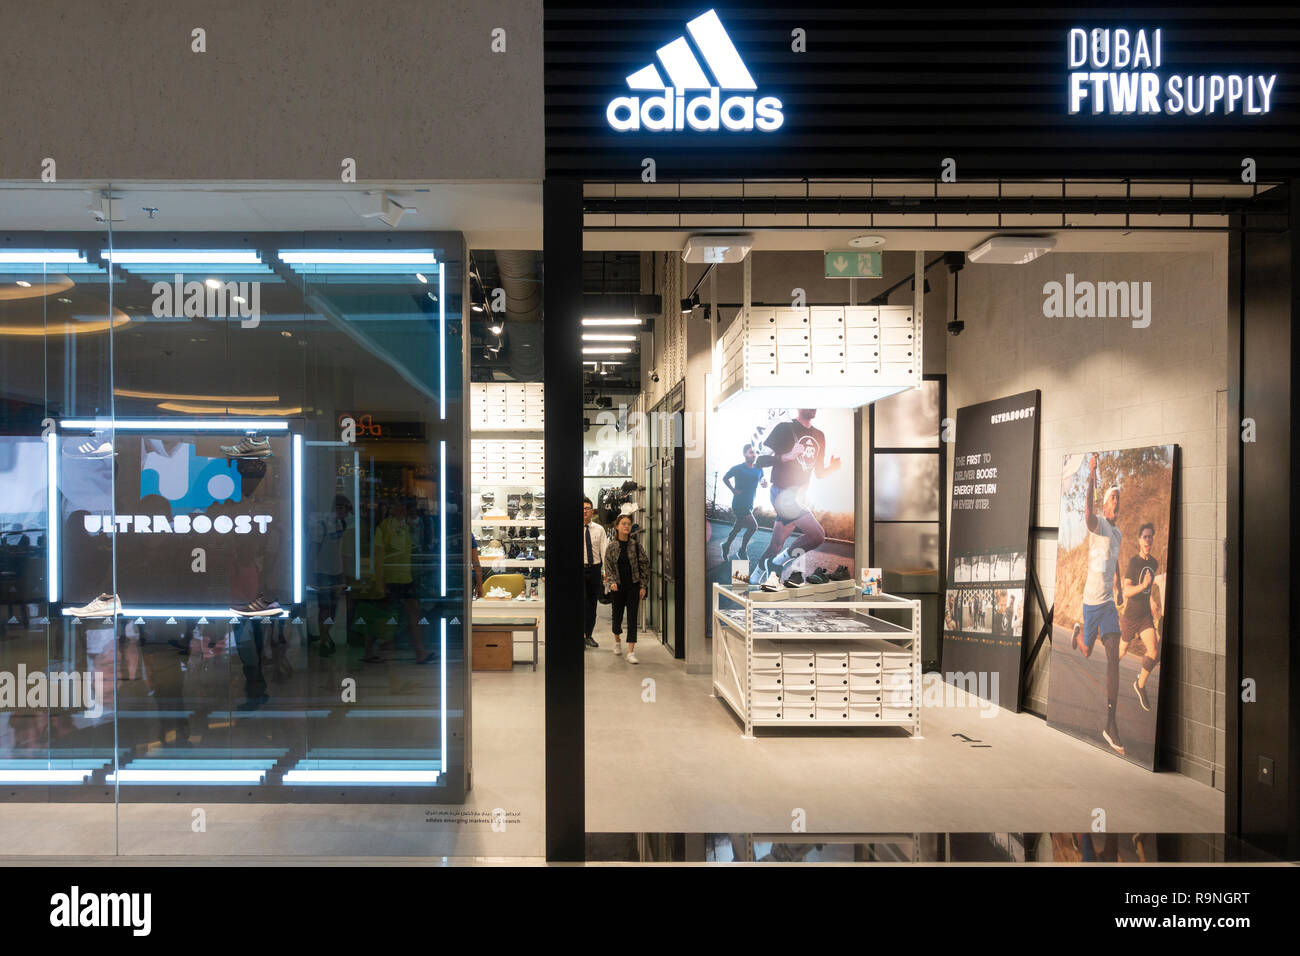 Pelmel La risa fantasma Nueva tienda de calzado Adidas , Dubai FTWR Suministro, dentro del centro  comercial Dubai Mall, Dubai, EAU Fotografía de stock - Alamy